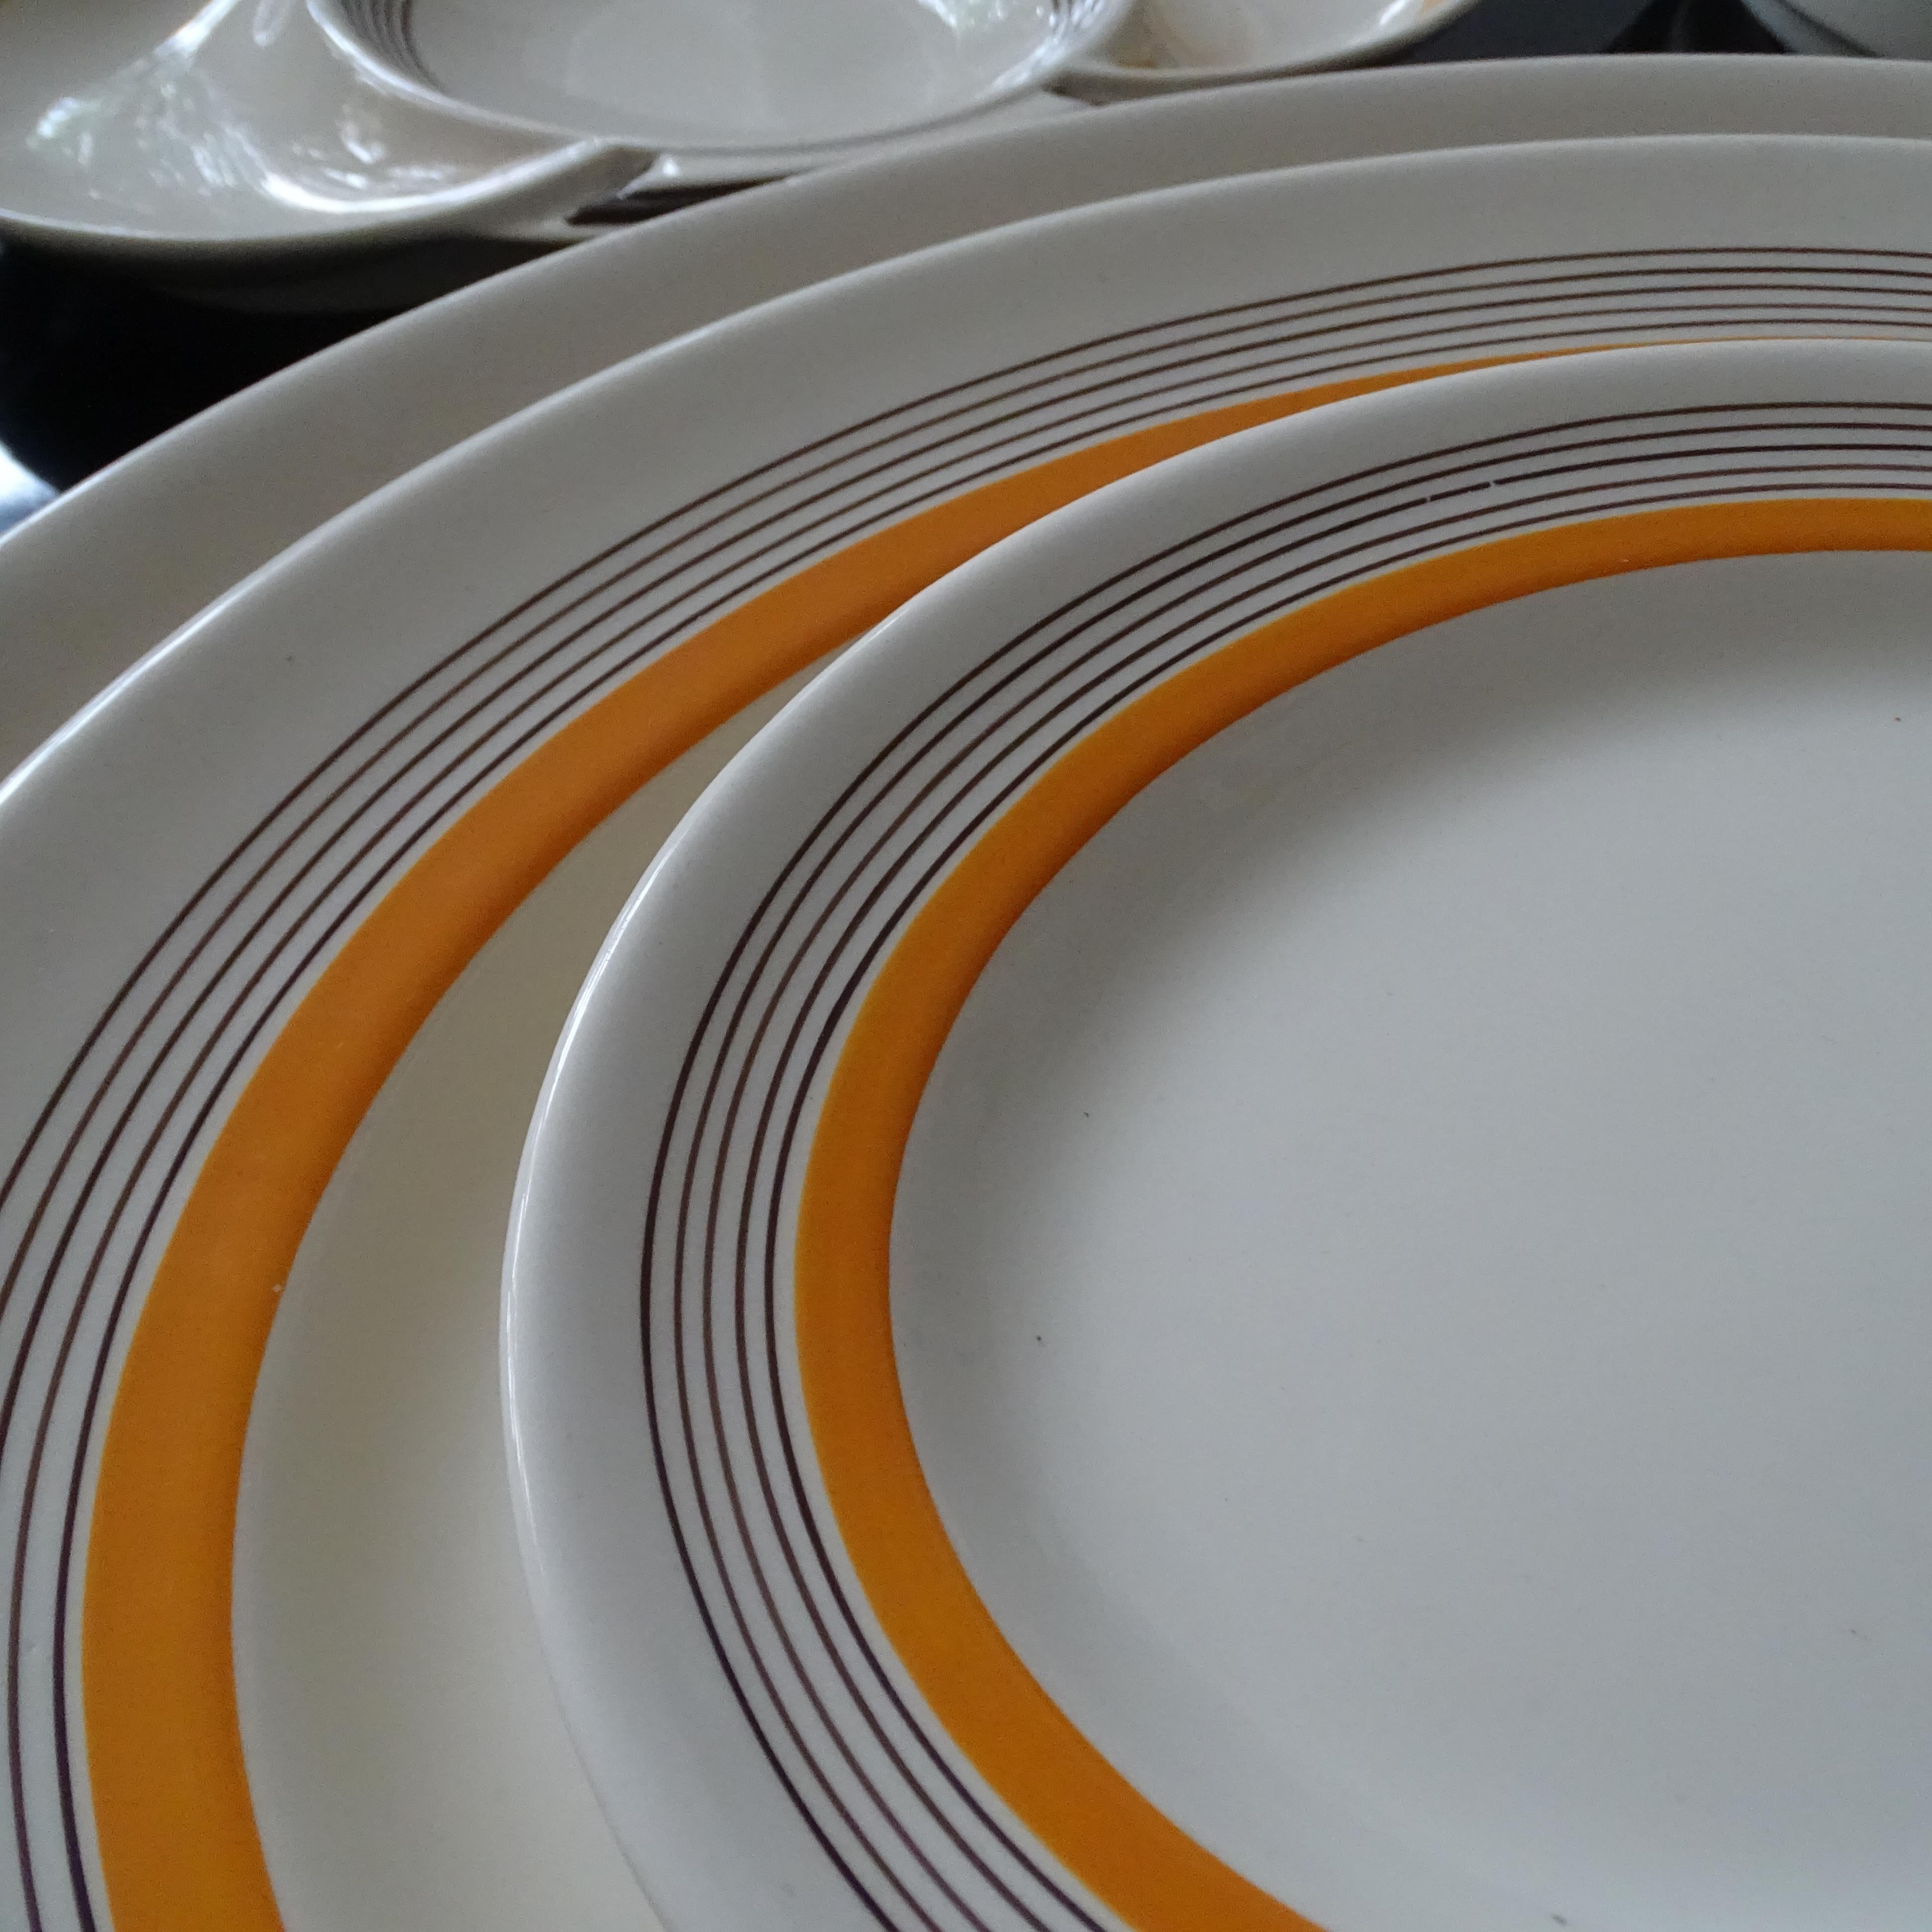 Art Deco Modernist 27-Pcs Royal Doulton England China Dinnerware Service For Sale 8